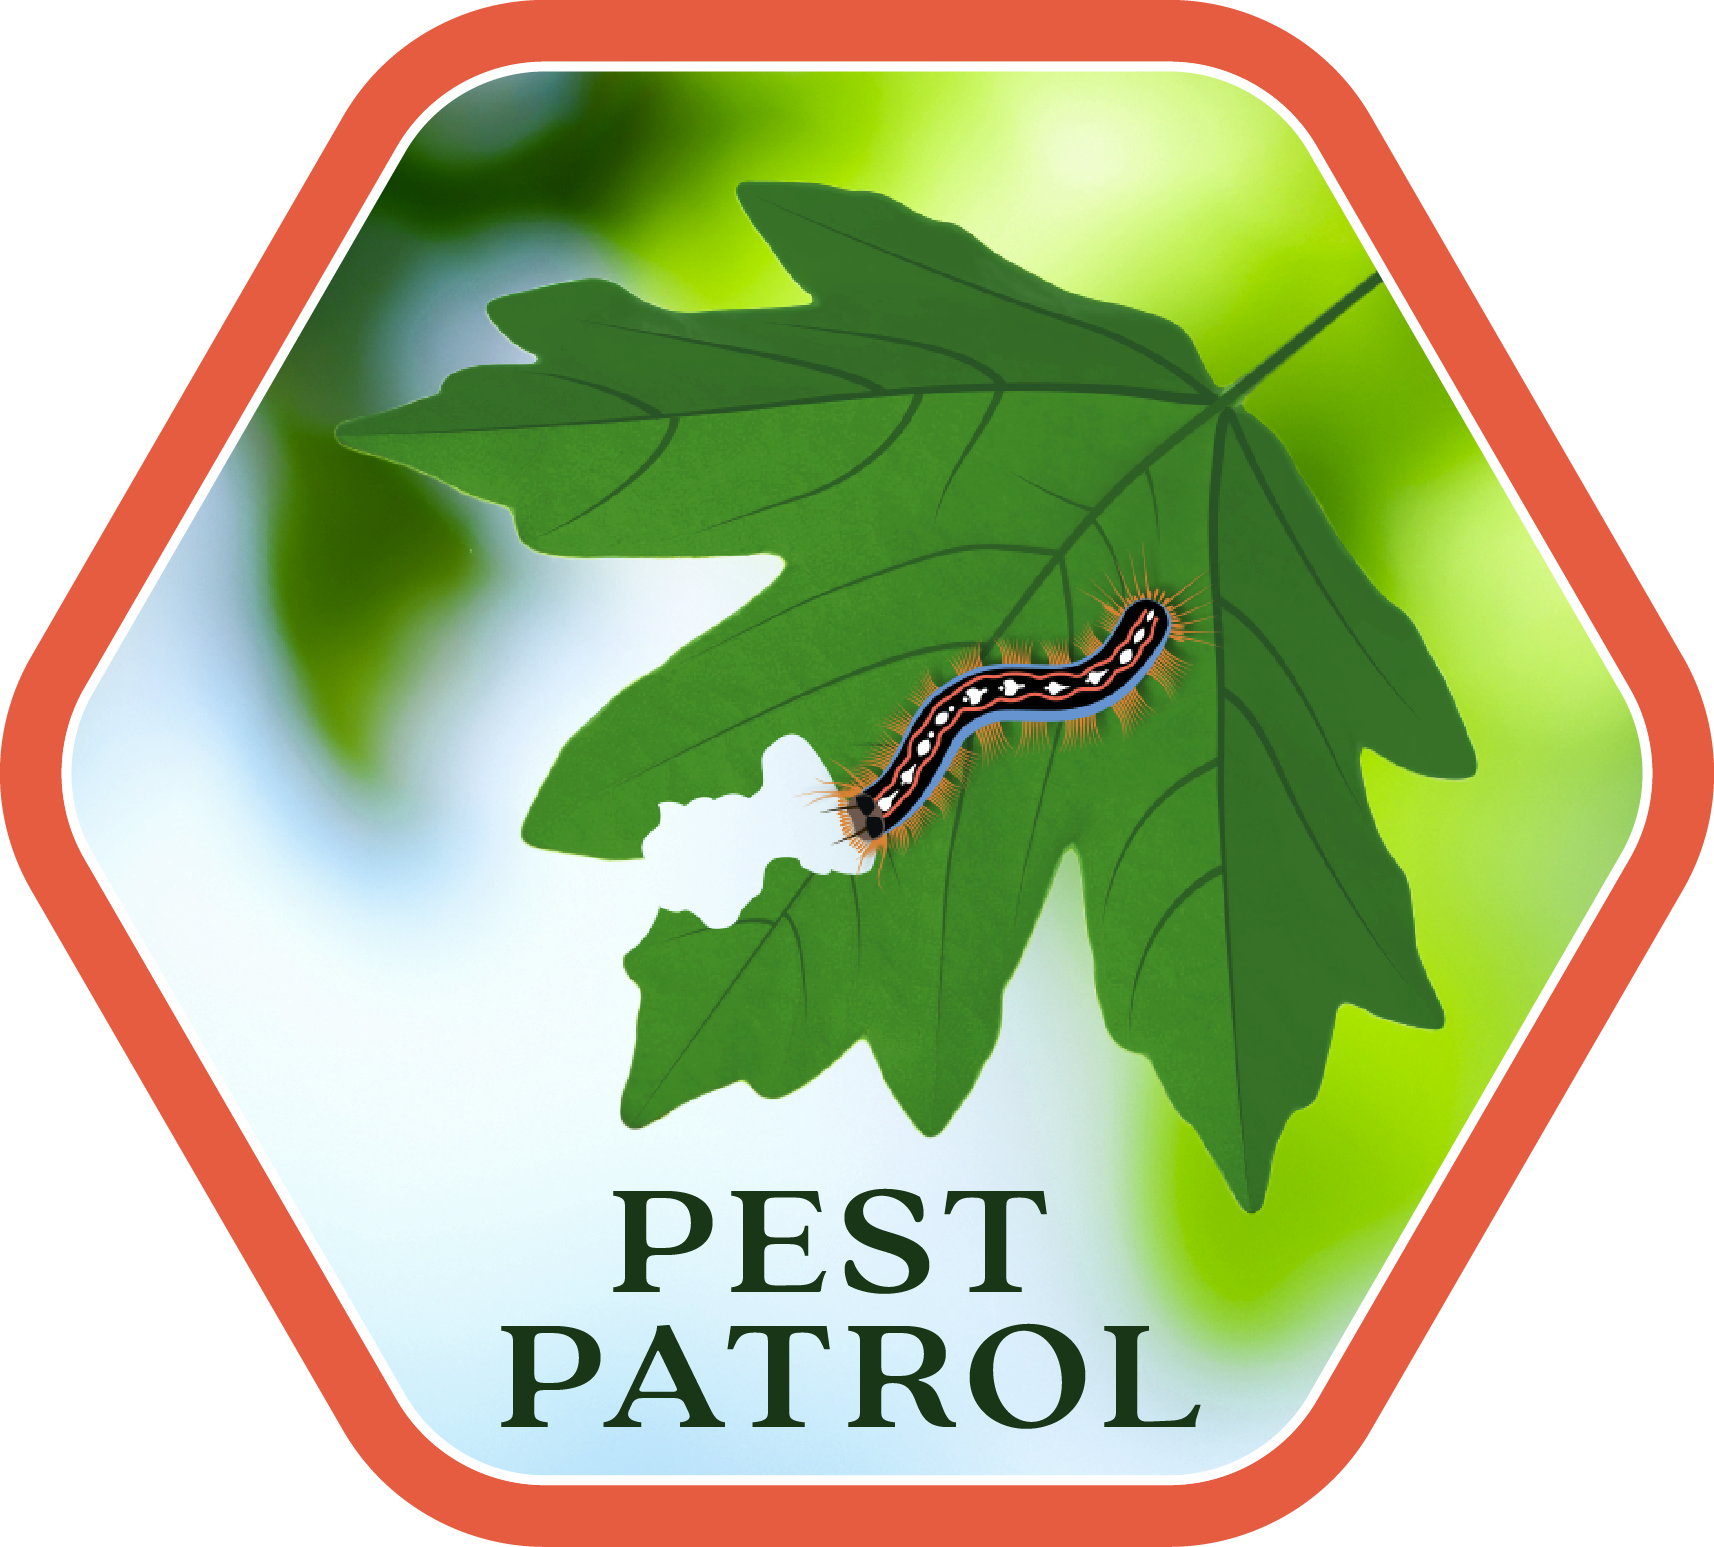 Pest Patrol campaign logo